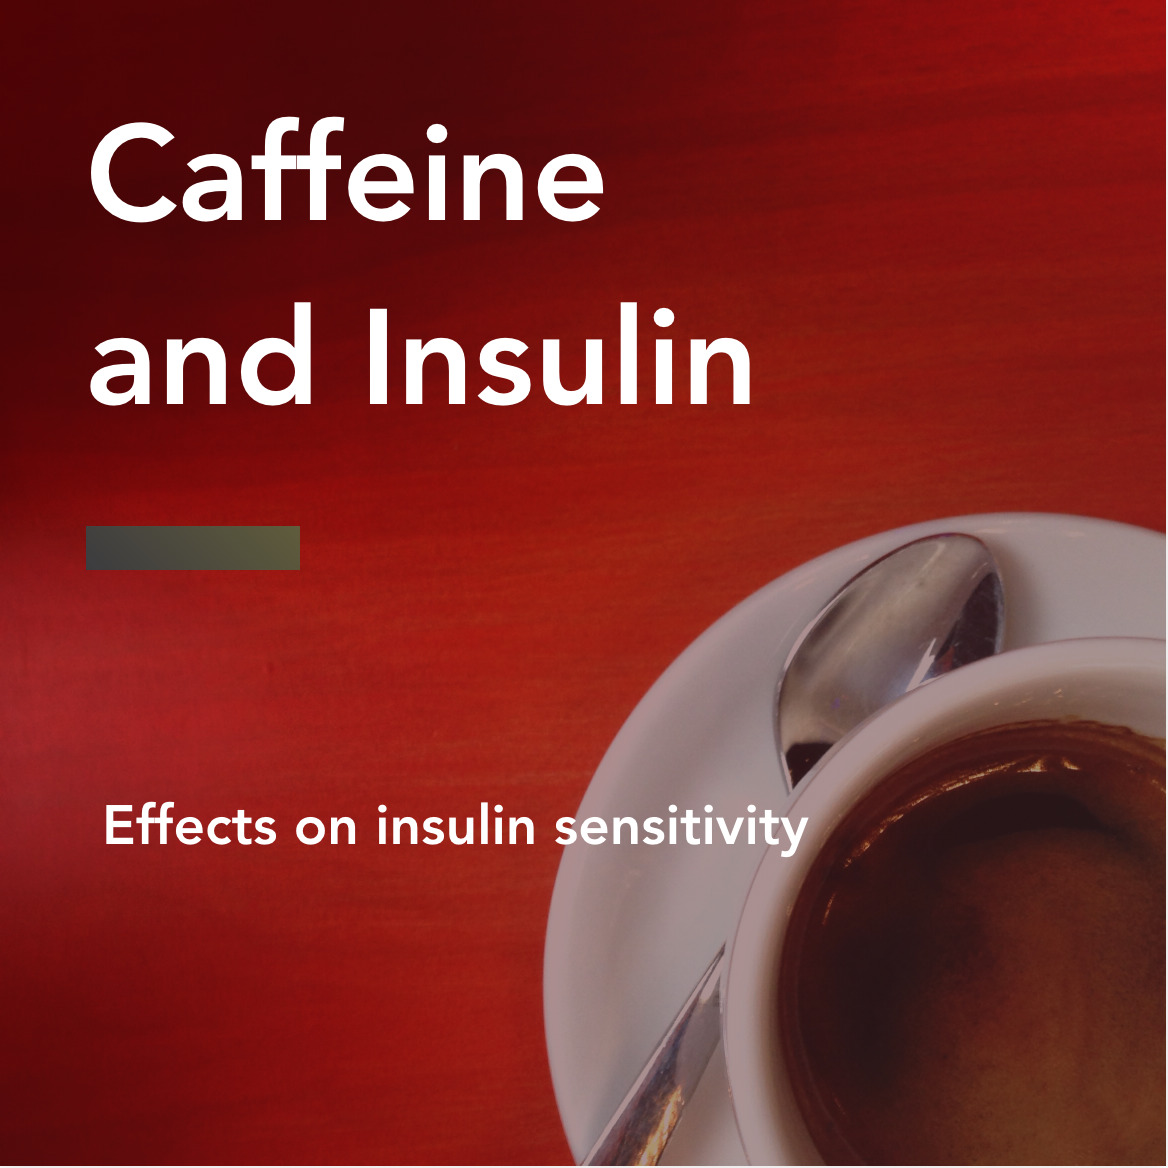 caffeine and insulin title